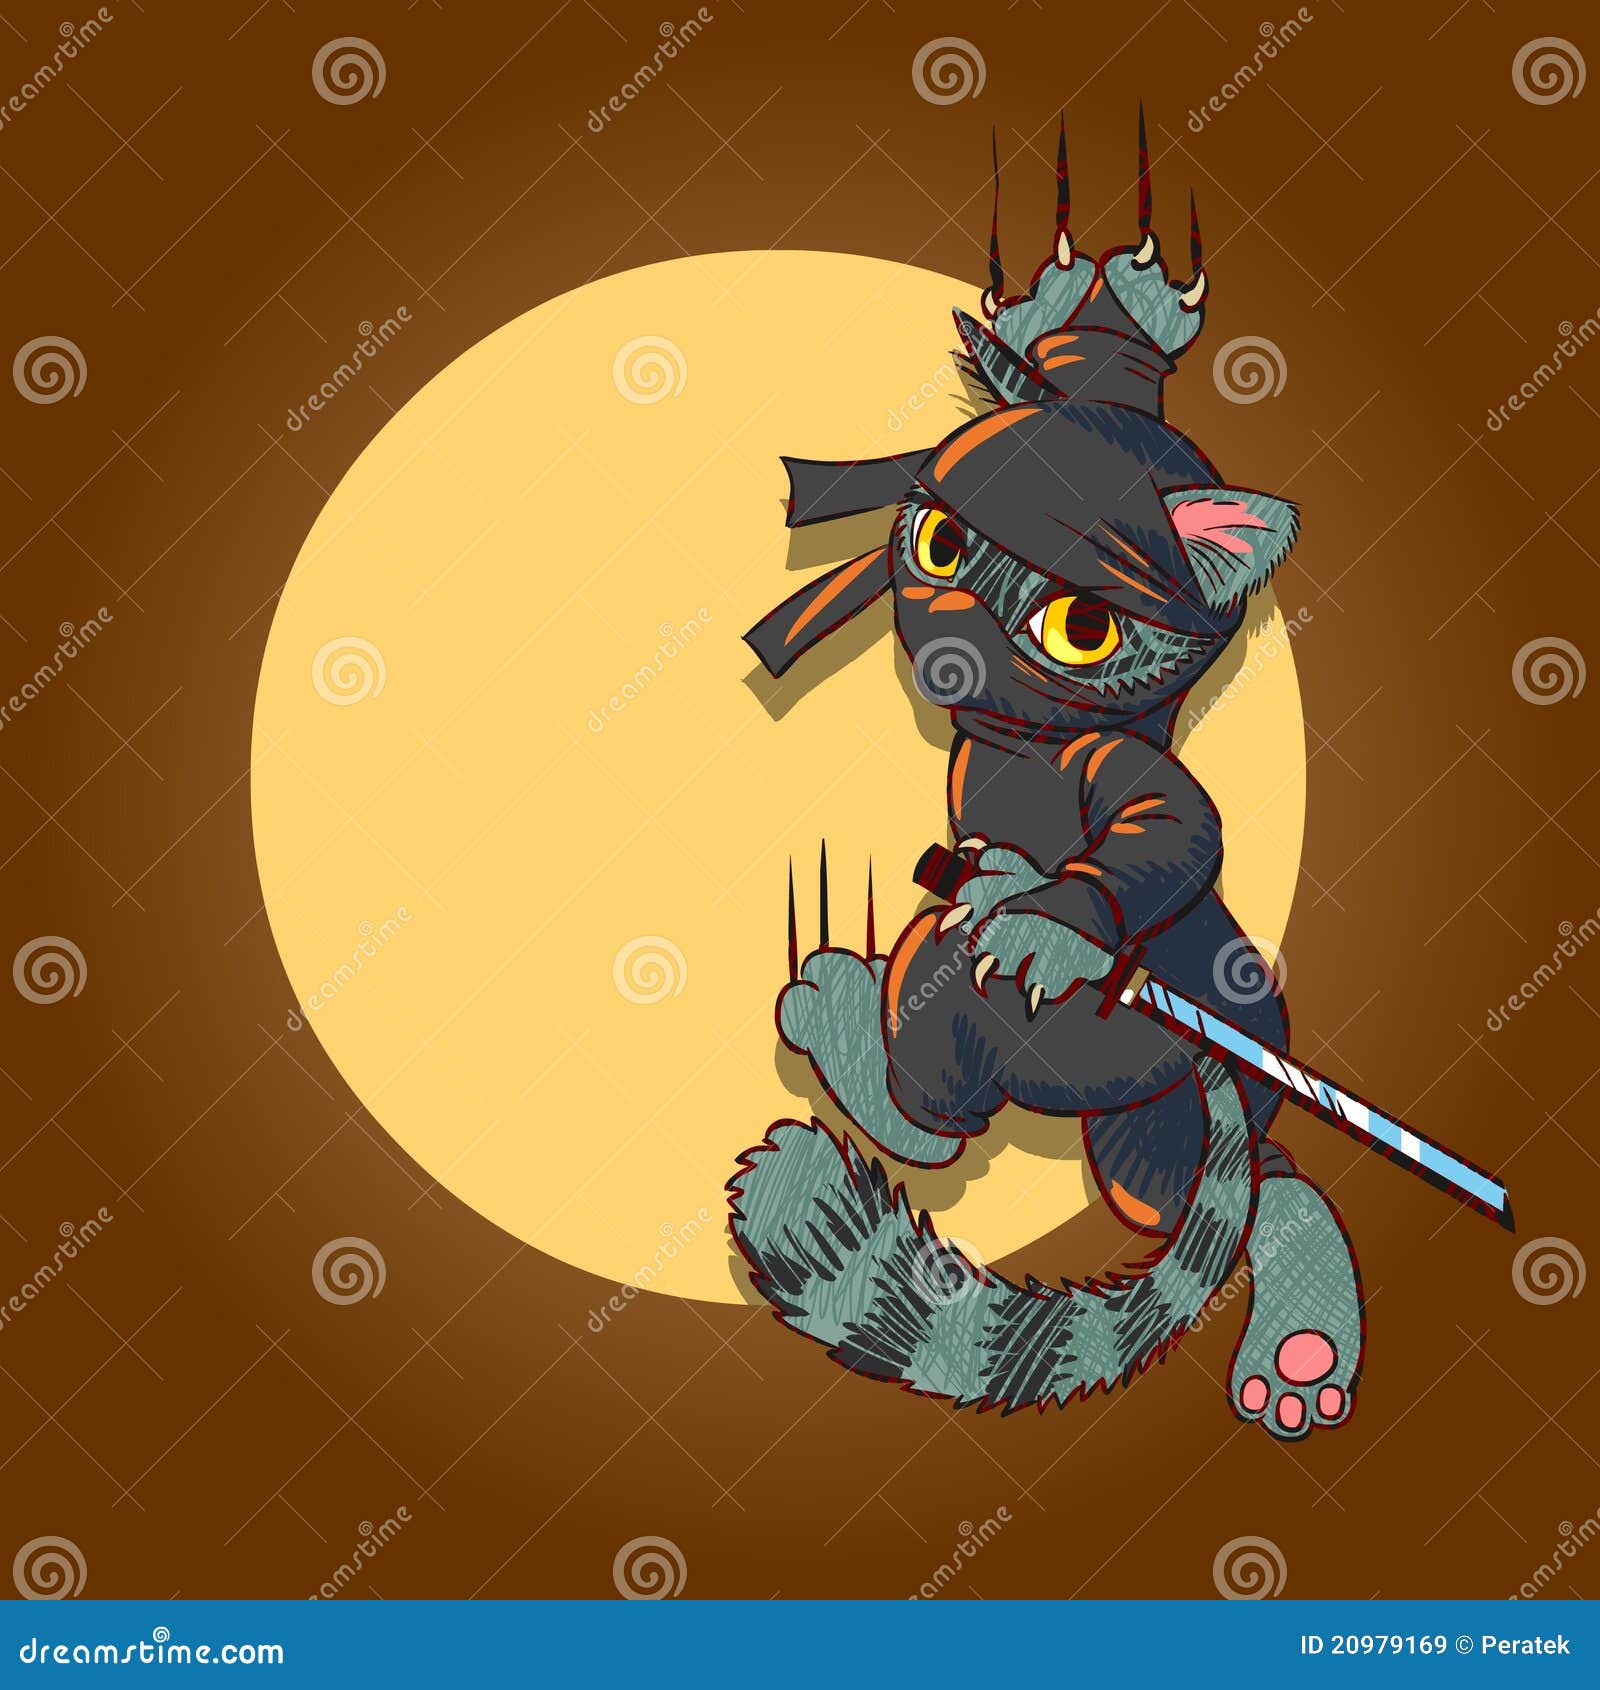 https://thumbs.dreamstime.com/z/ninja-cat-20979169.jpg